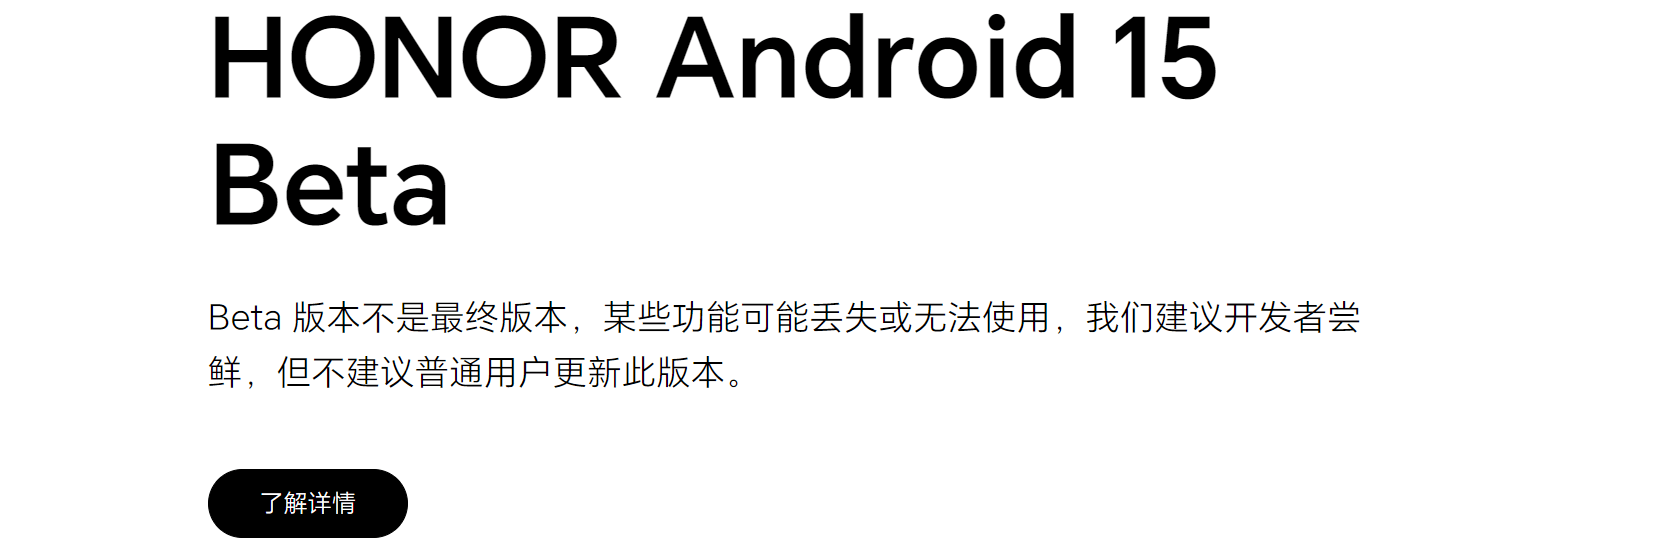 Android 15预览版荣耀开发者适配计划